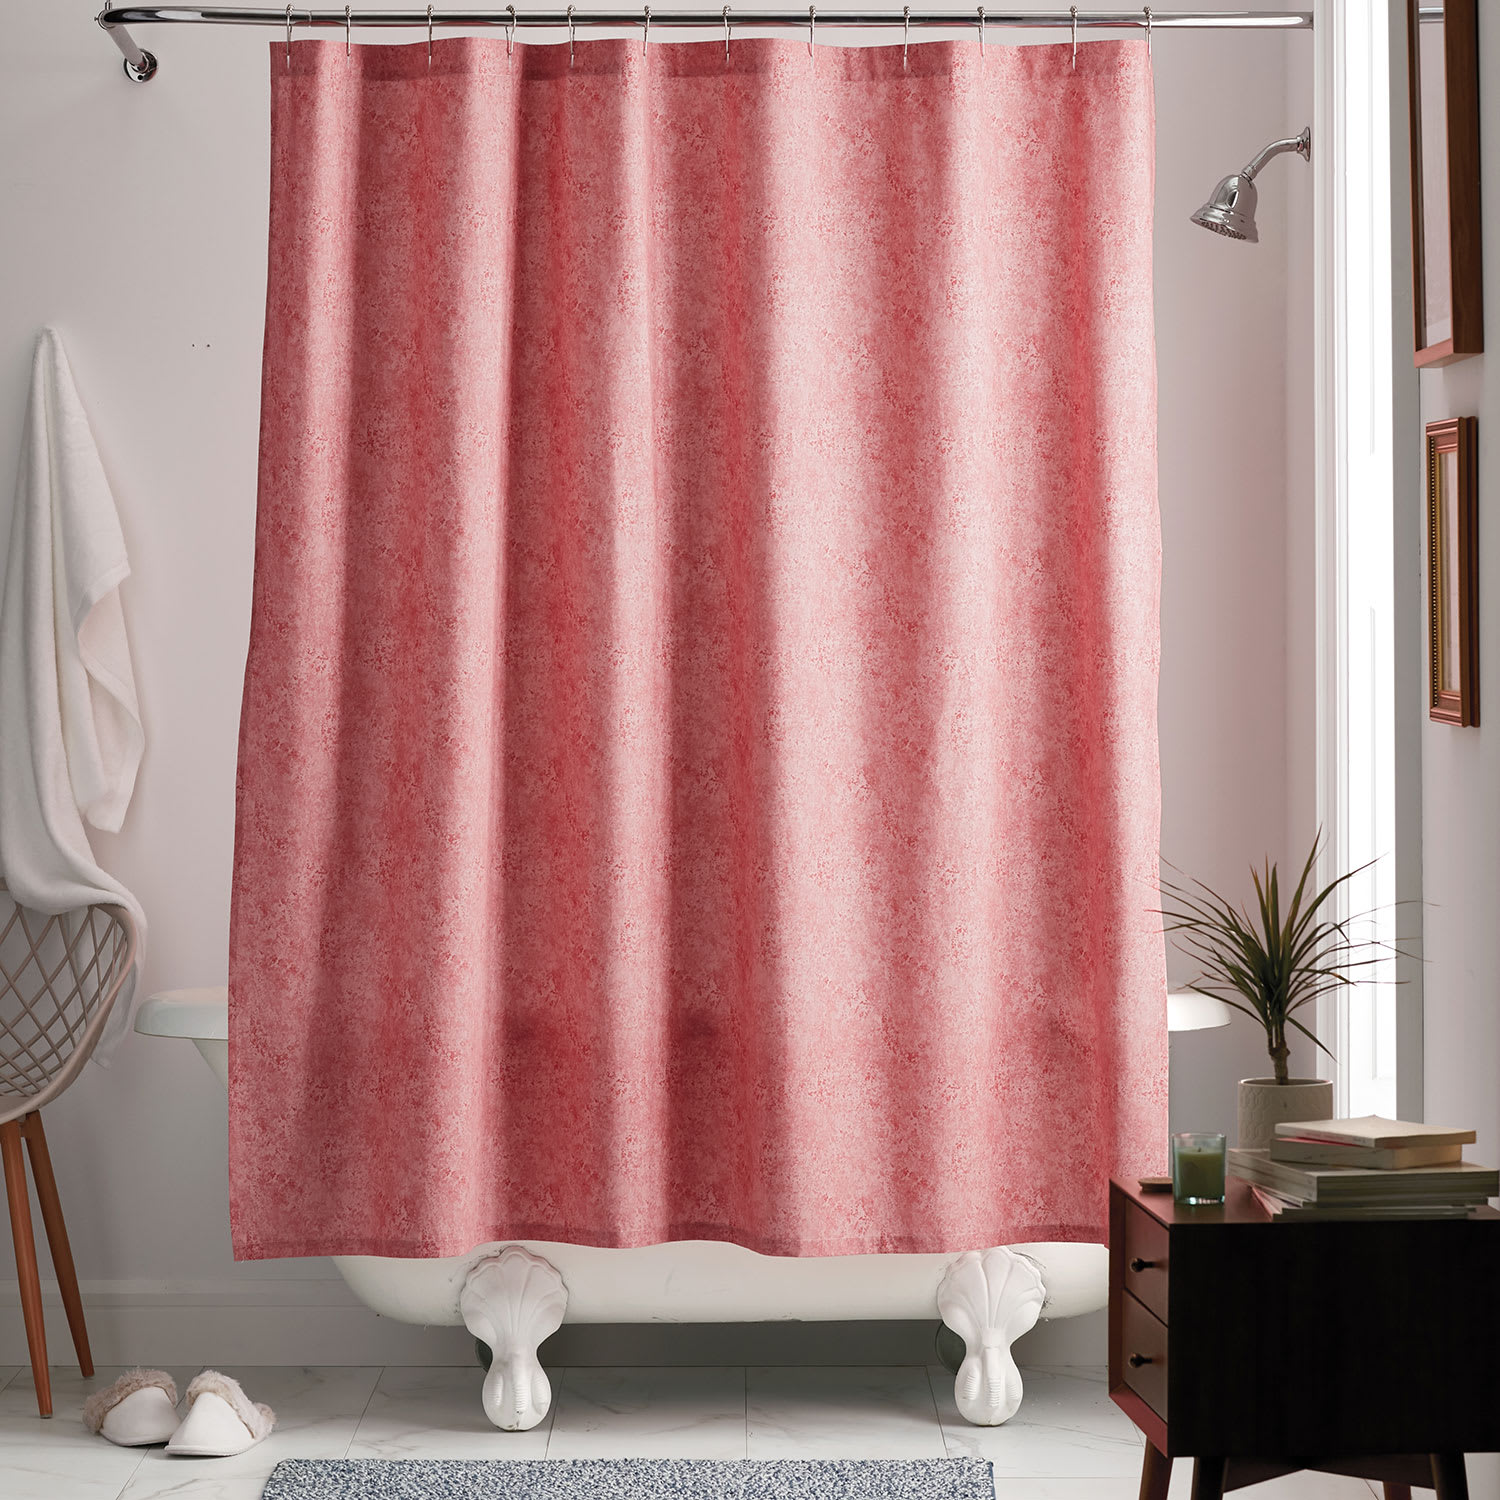 Cstudio Home Vintage Wash Organic Cotton Percale Shower Curtain - Terracotta